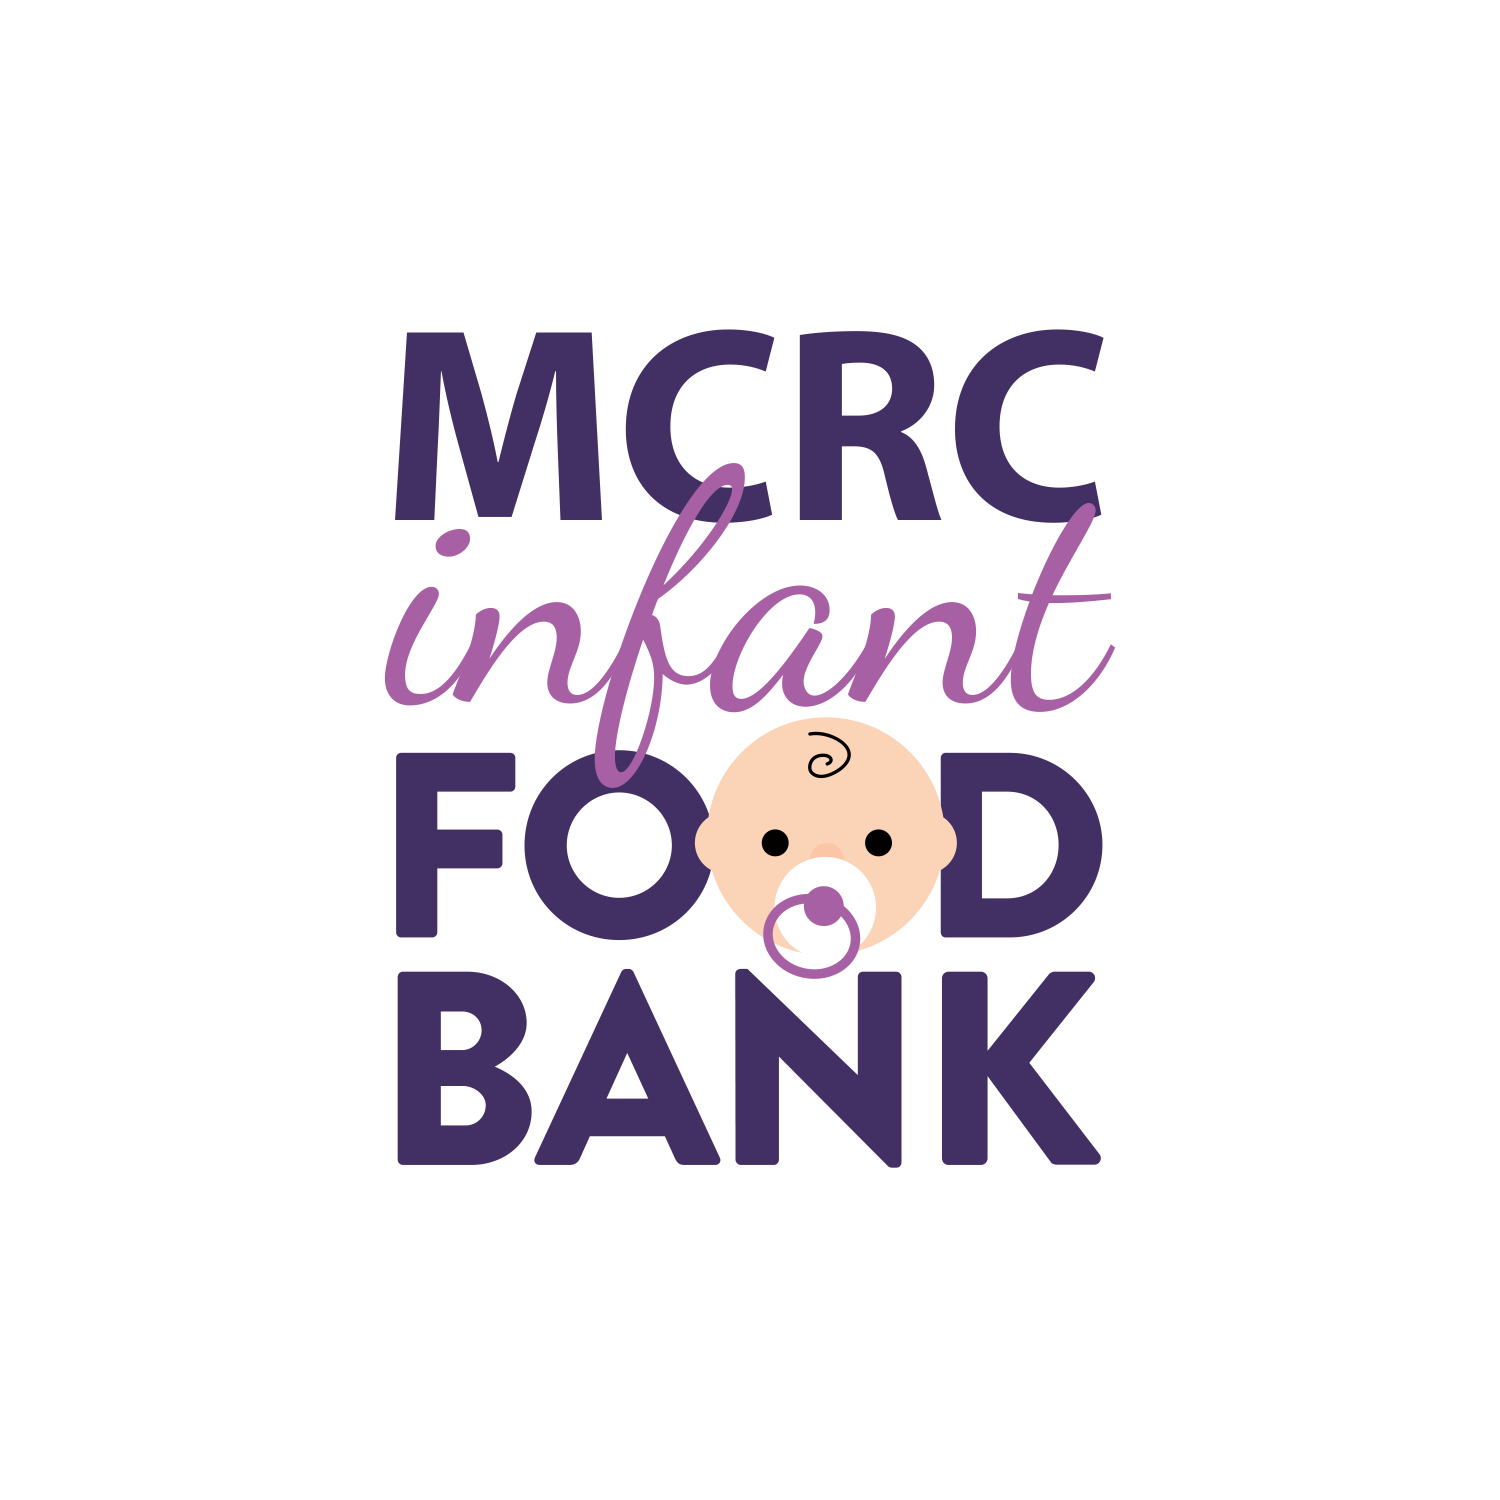 MCRC Infant Food Bank Logo